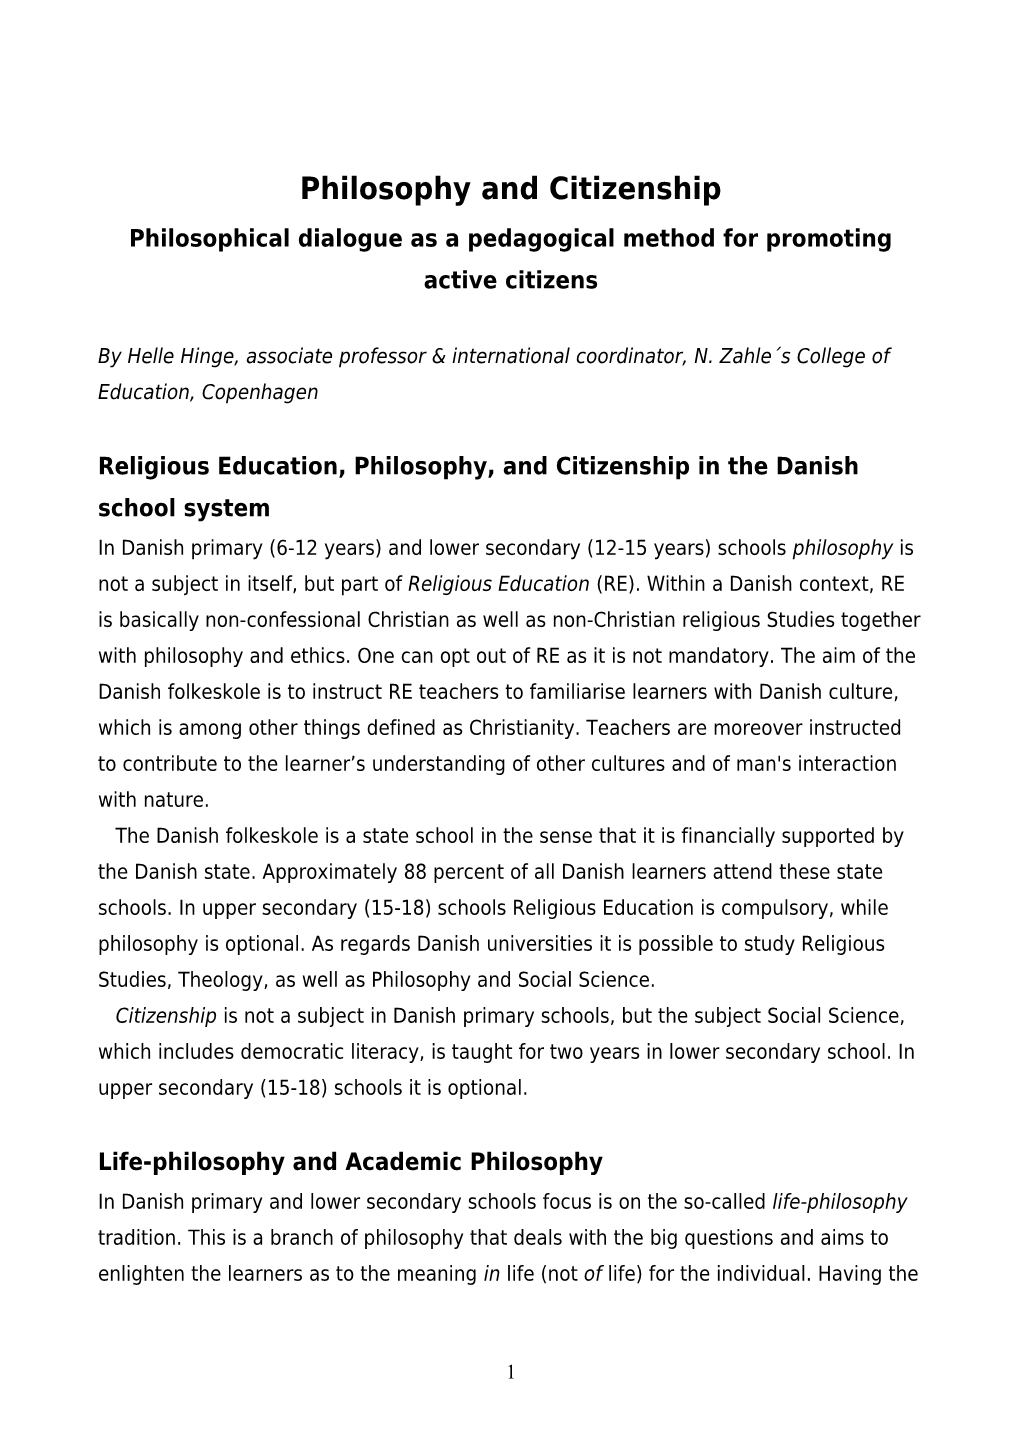 Religious Education and Citizenship: Philosophical Dialogue As a Pedagogical Method For